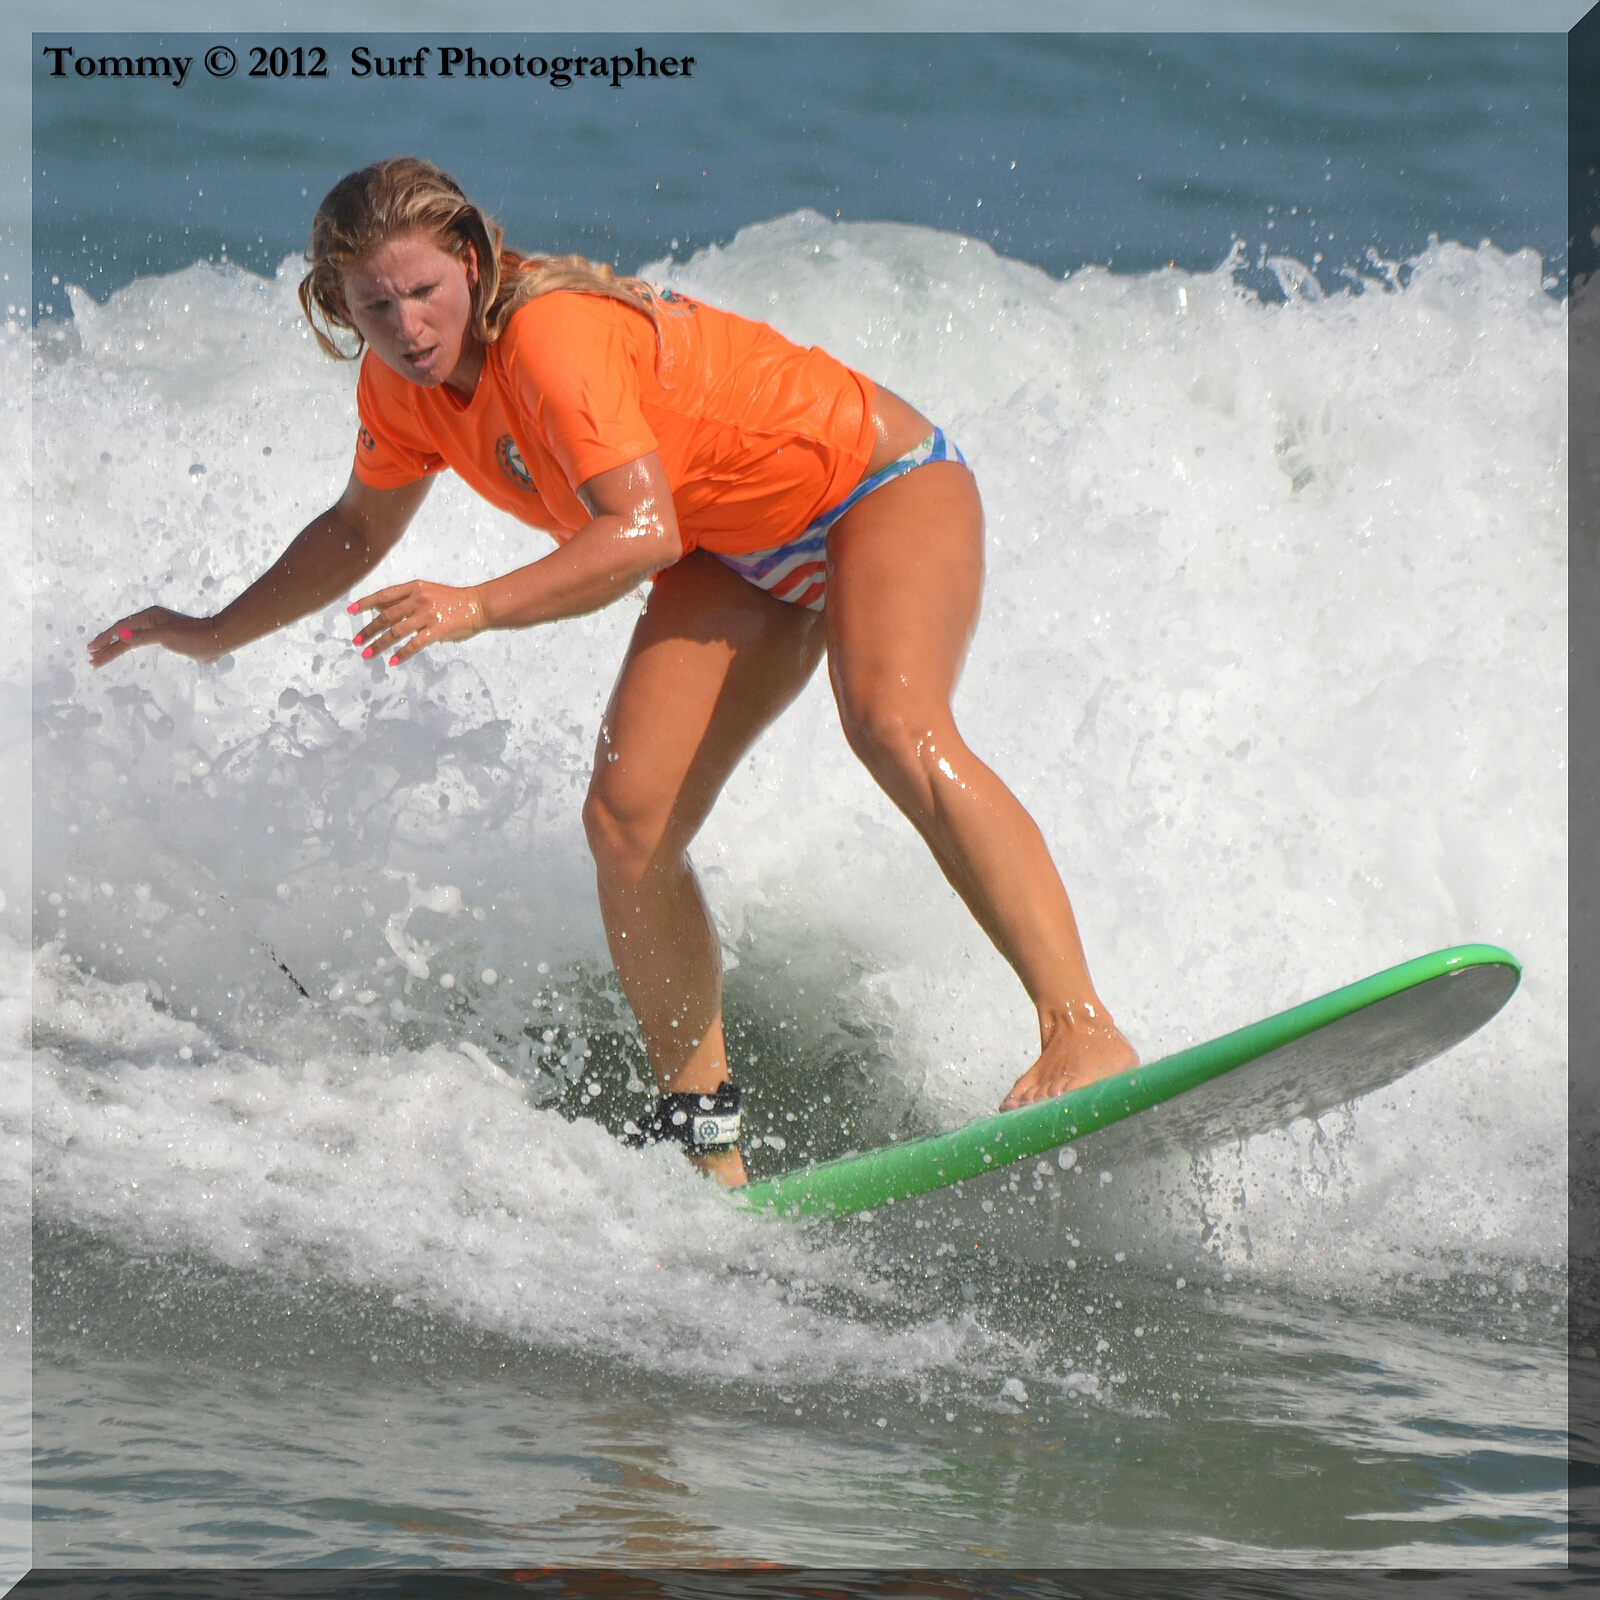 SURF 30-08-2012 09-43-39